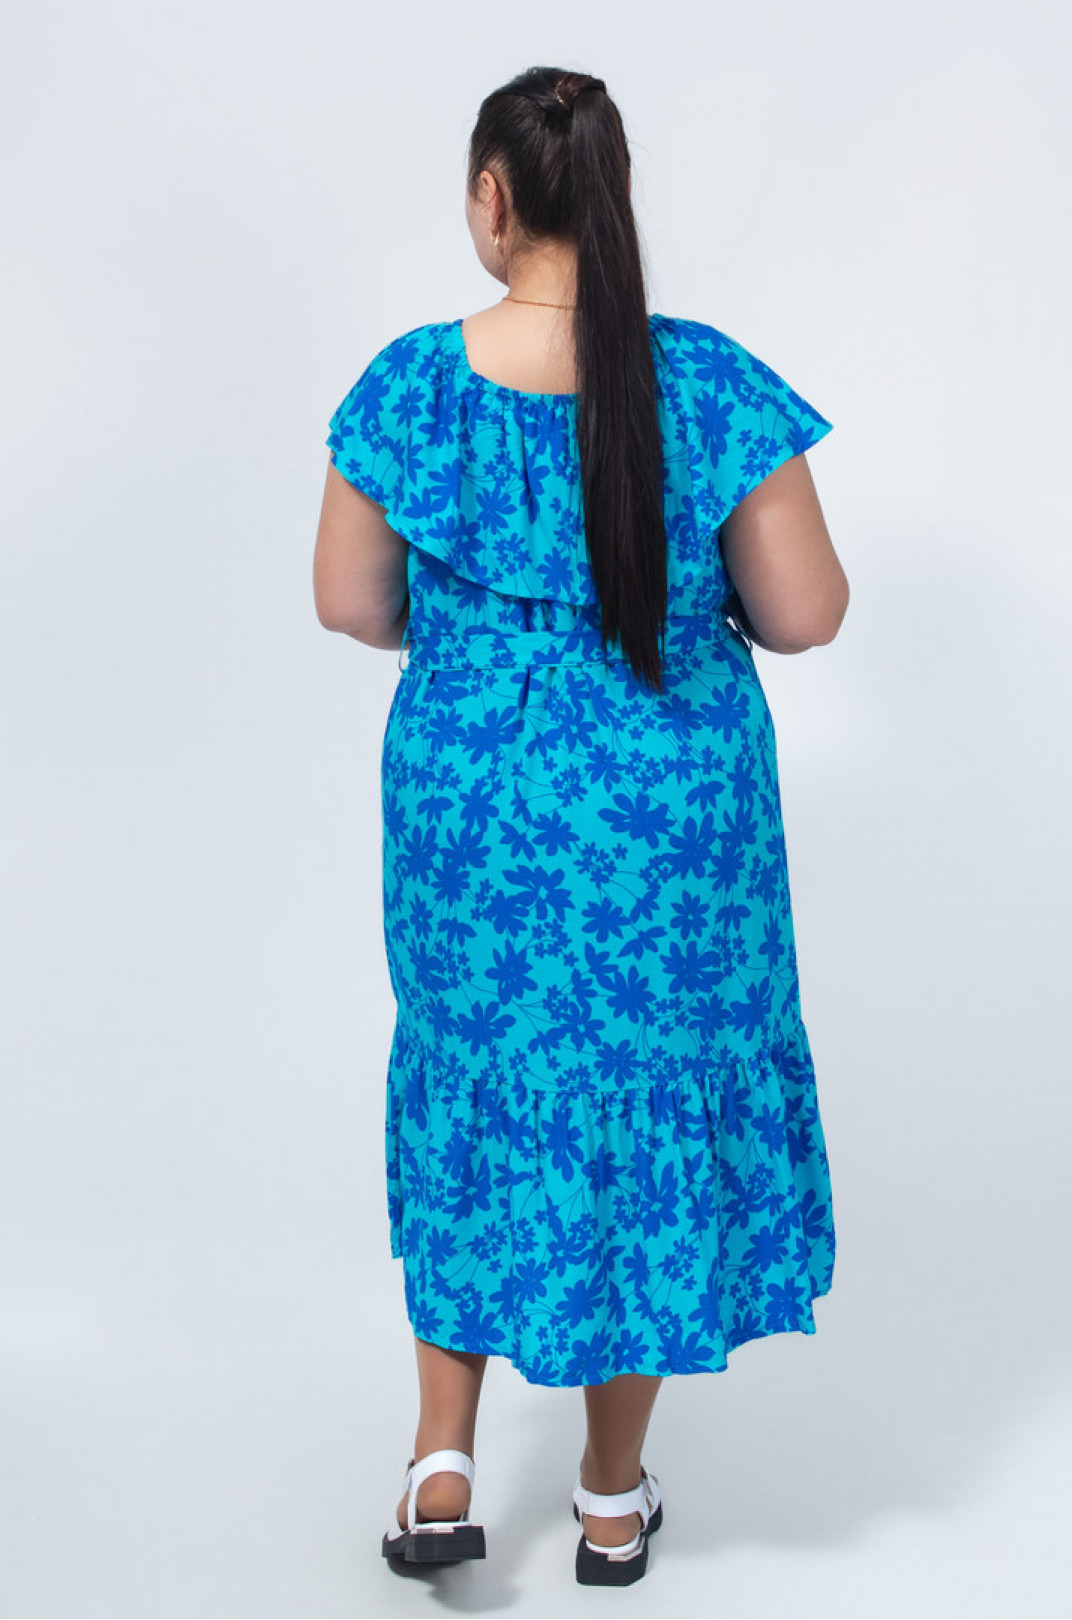 Сарафан-платье с поясом супер батал